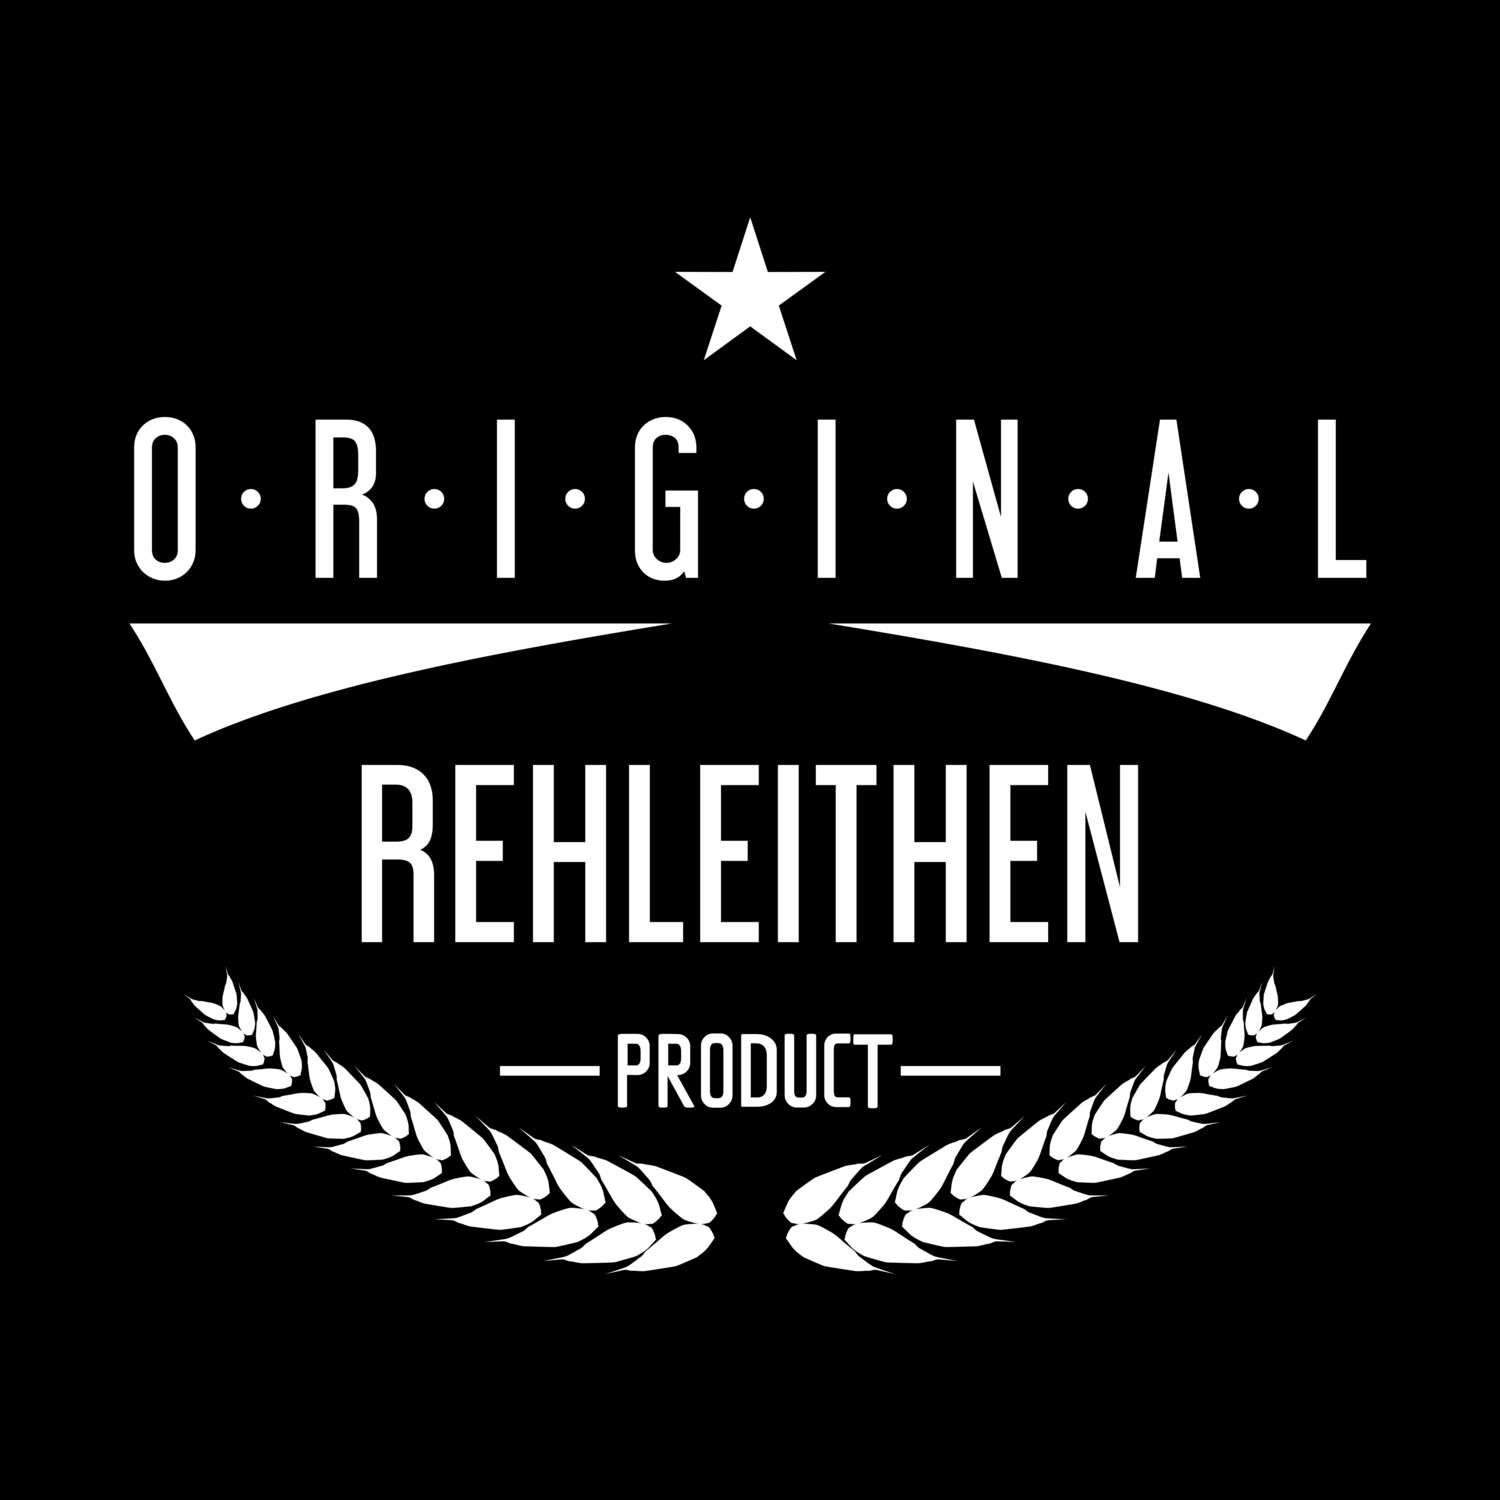 Rehleithen T-Shirt »Original Product«